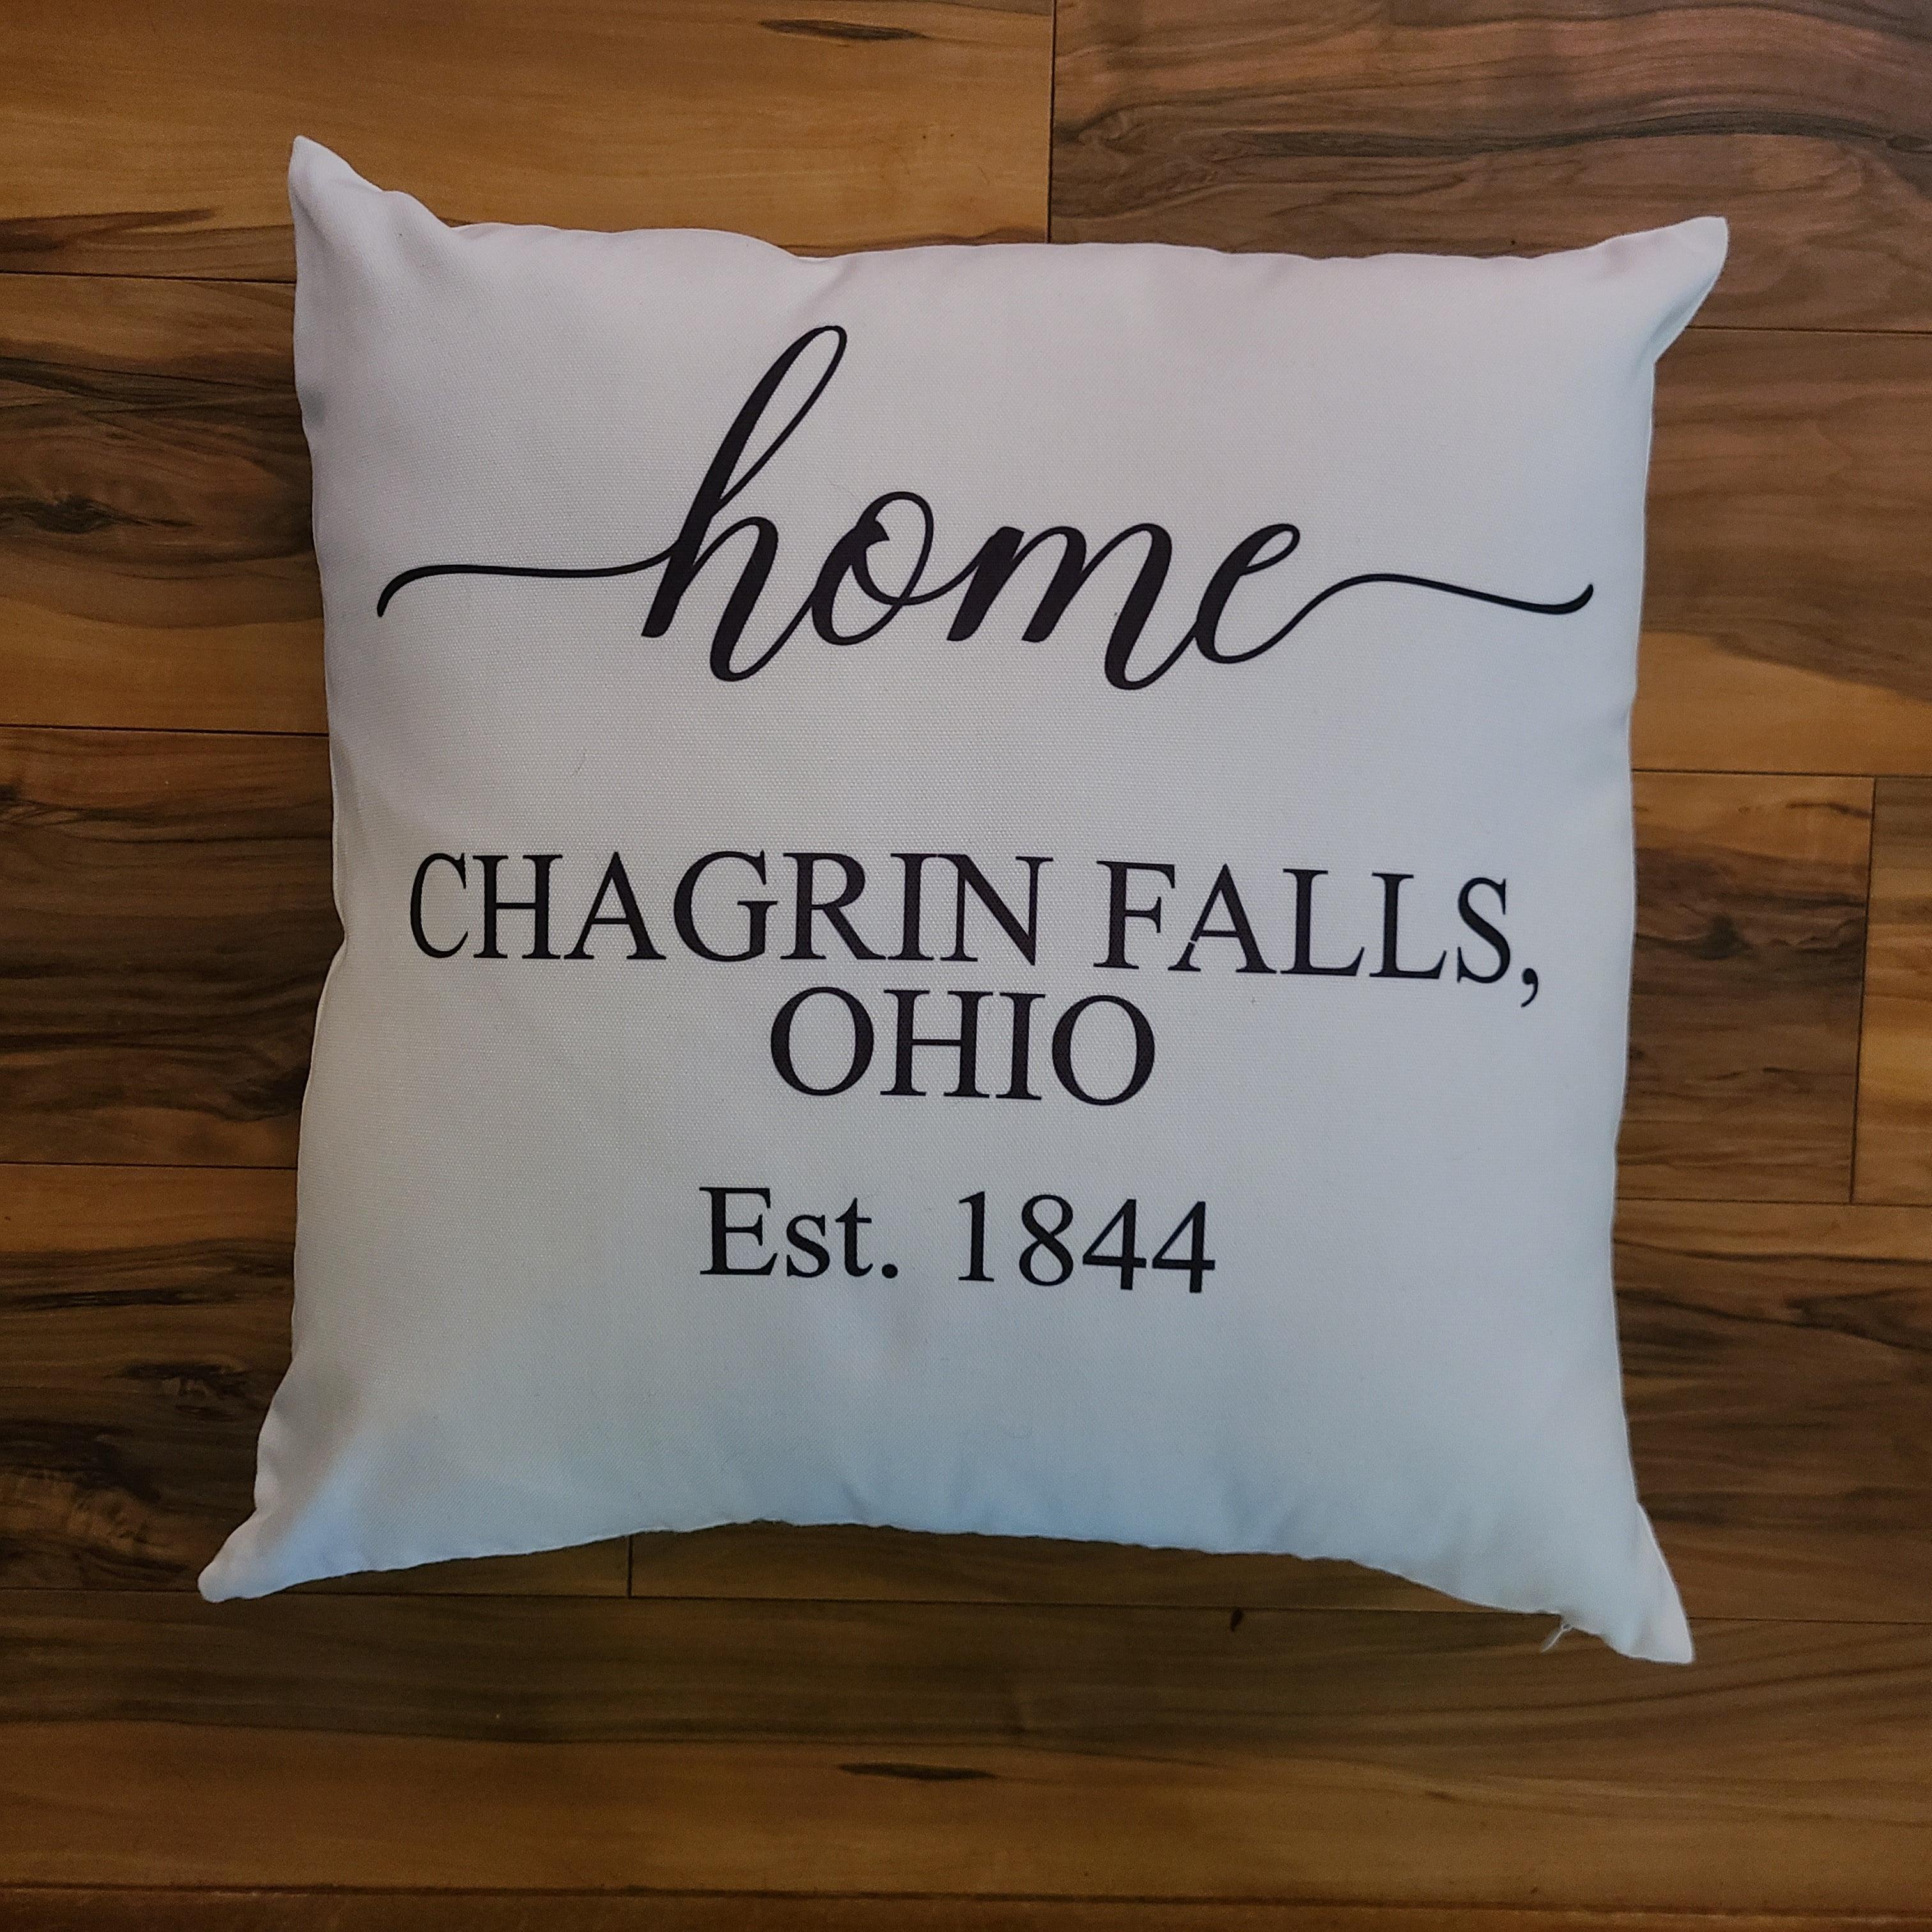 chagrin falls ohio pillow white fabric black lettering  est, 1844